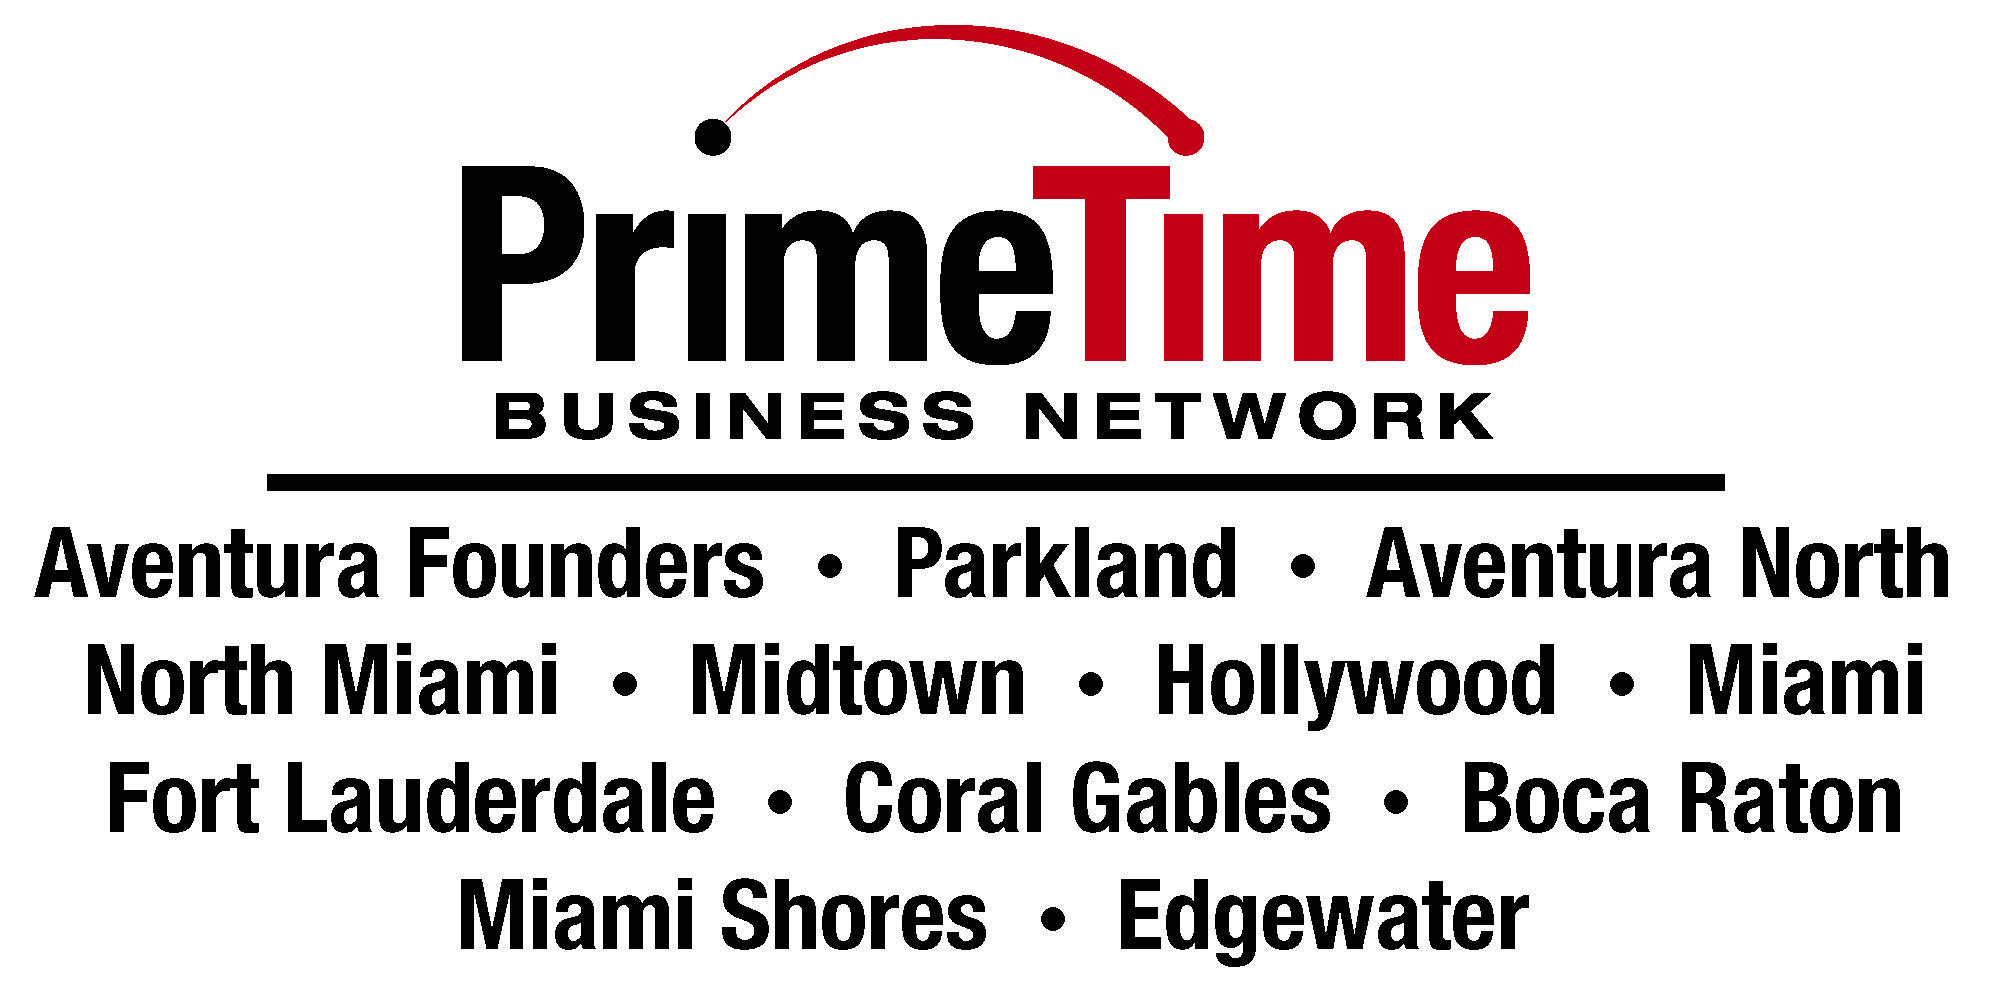 Prime Time Business Network Aventura